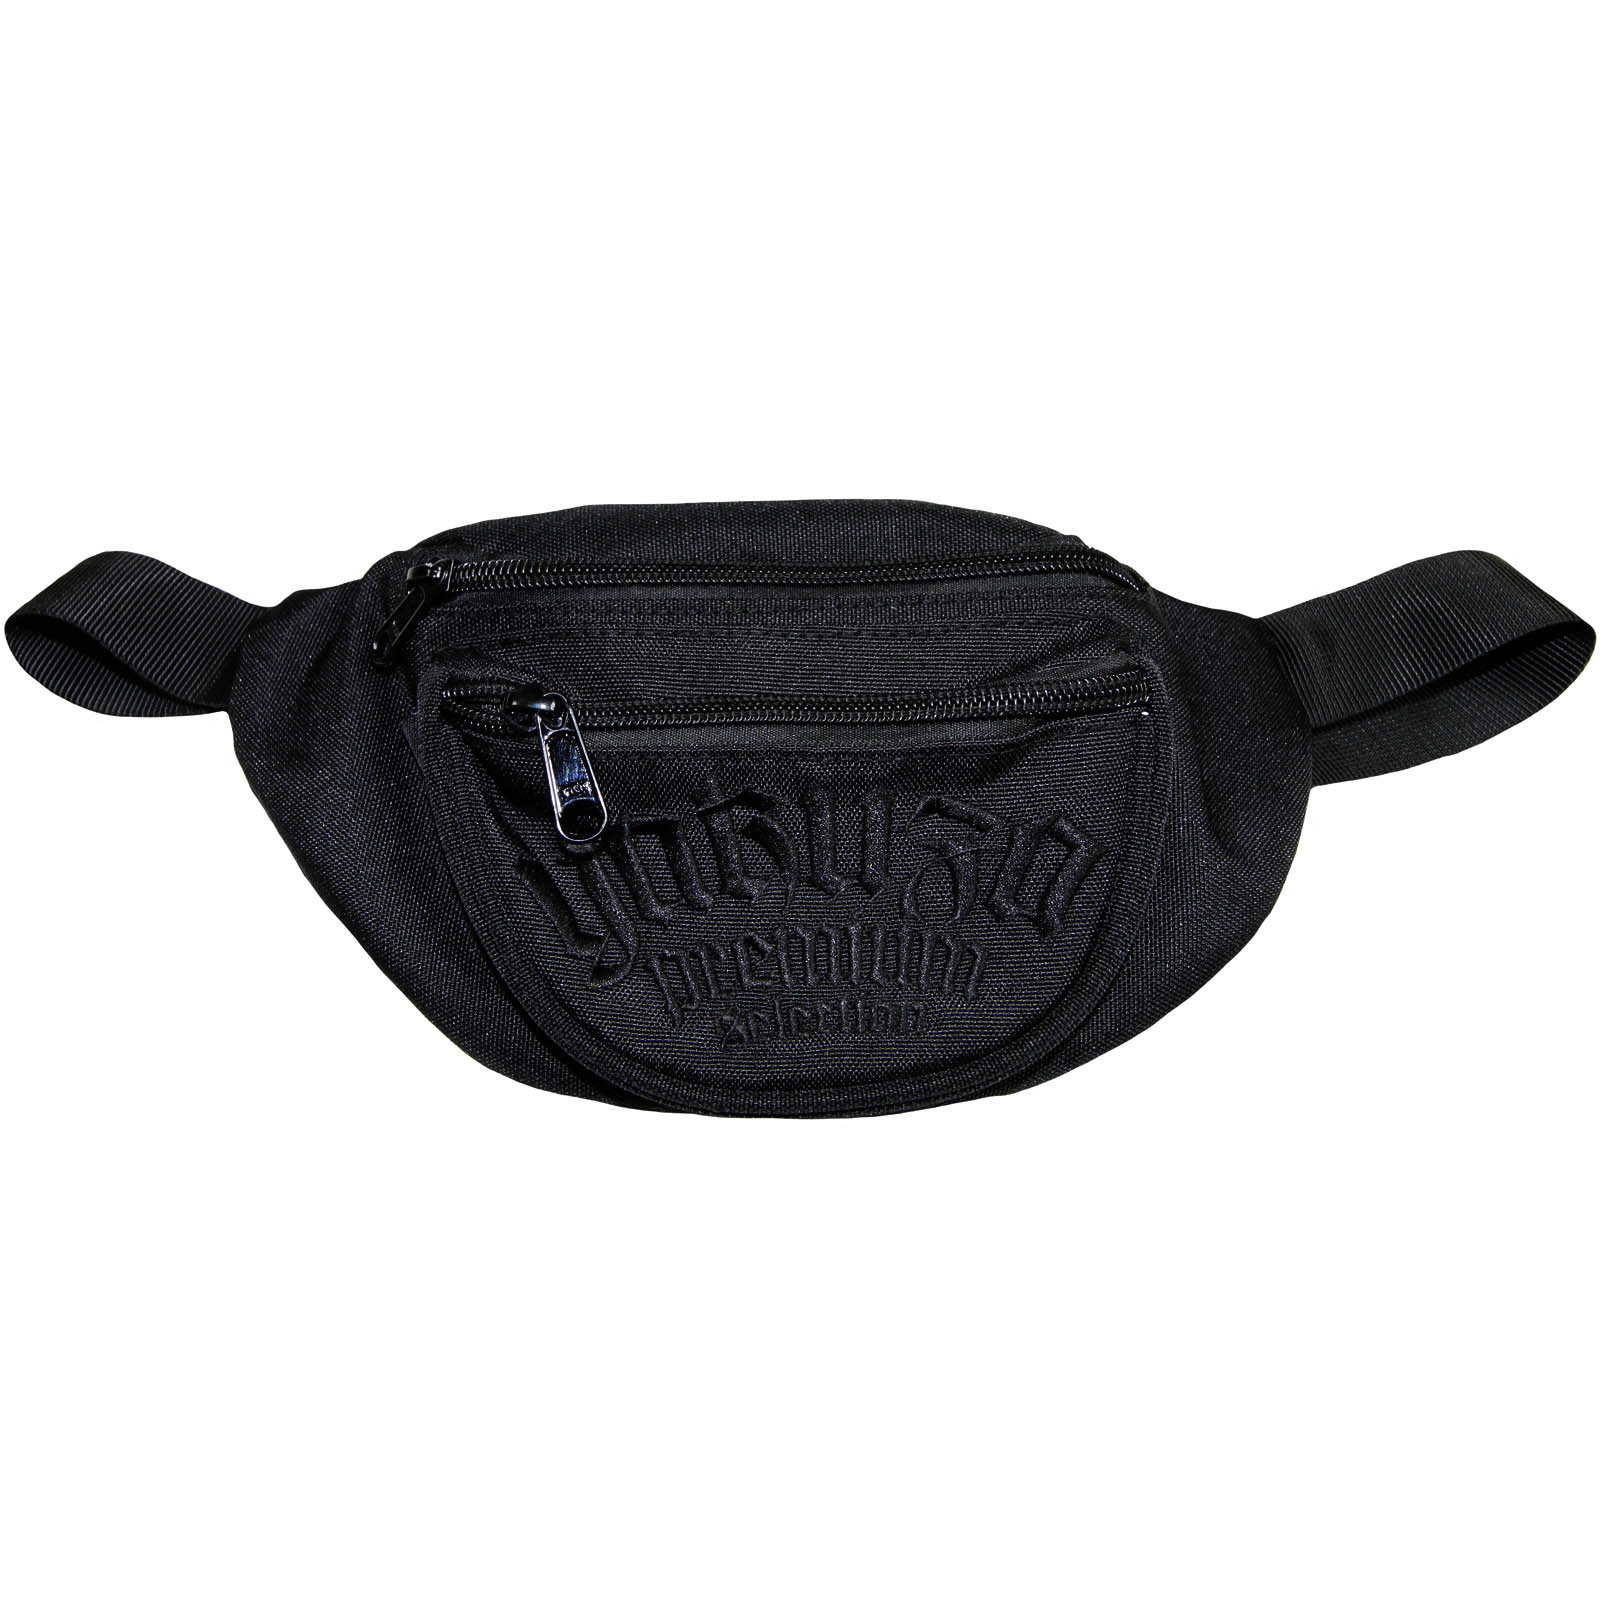 Yakuza Premium 2770 Belt bag with detailed embroidery